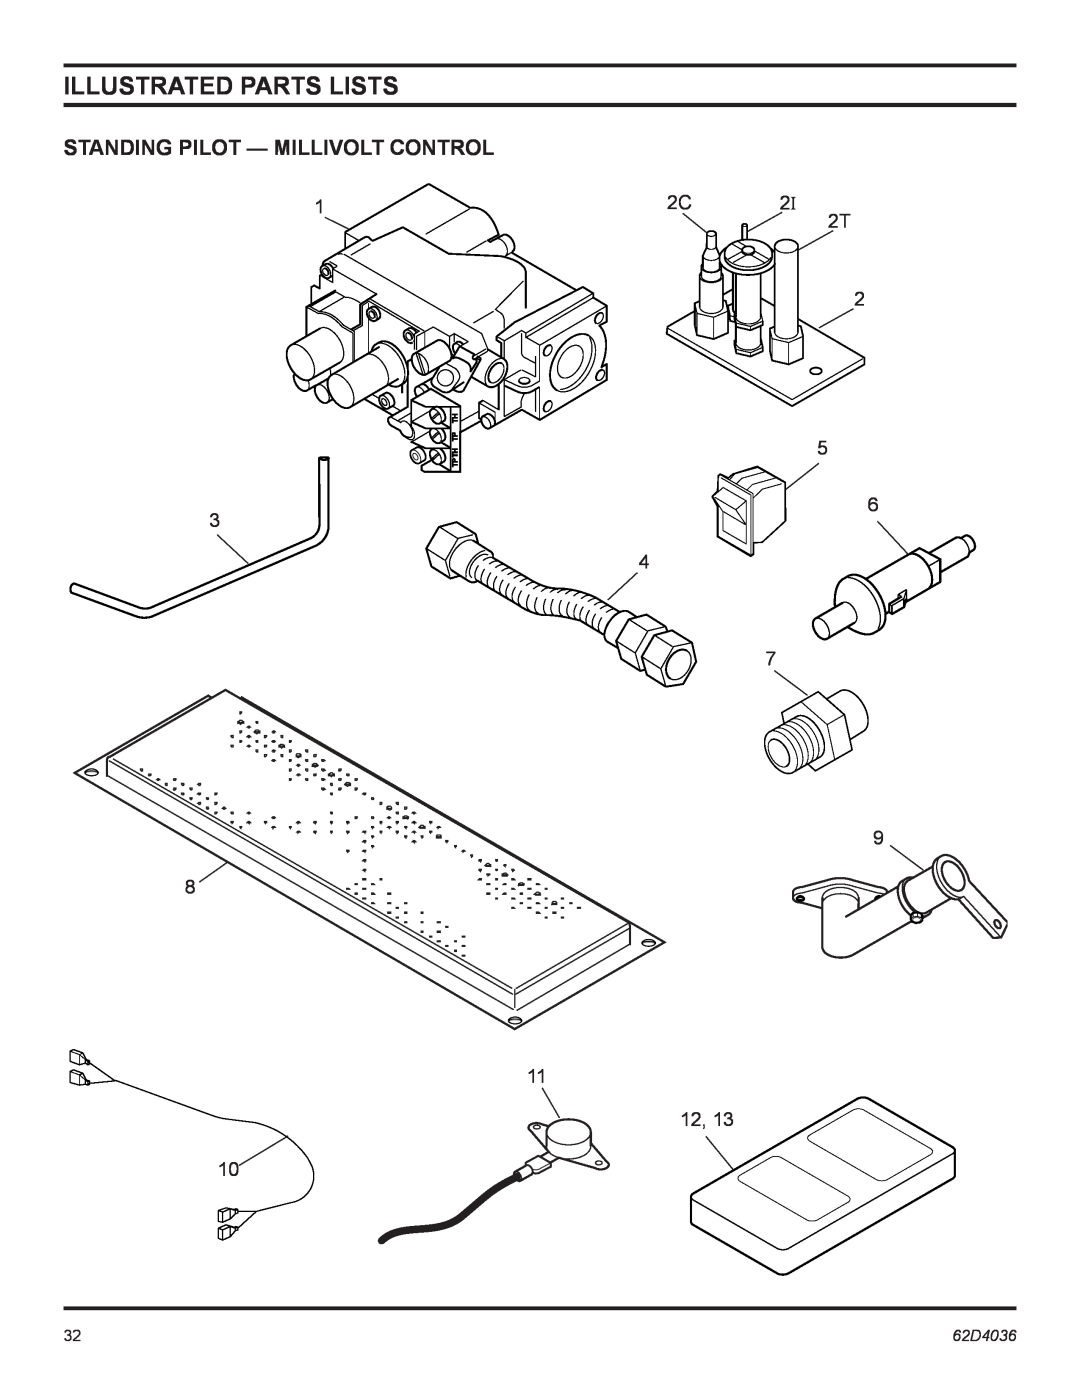 Monessen Hearth BBV400, SBV400, SBV500 manual Illustrated Parts Lists, Standing Pilot - Millivolt Control, 62D4036 